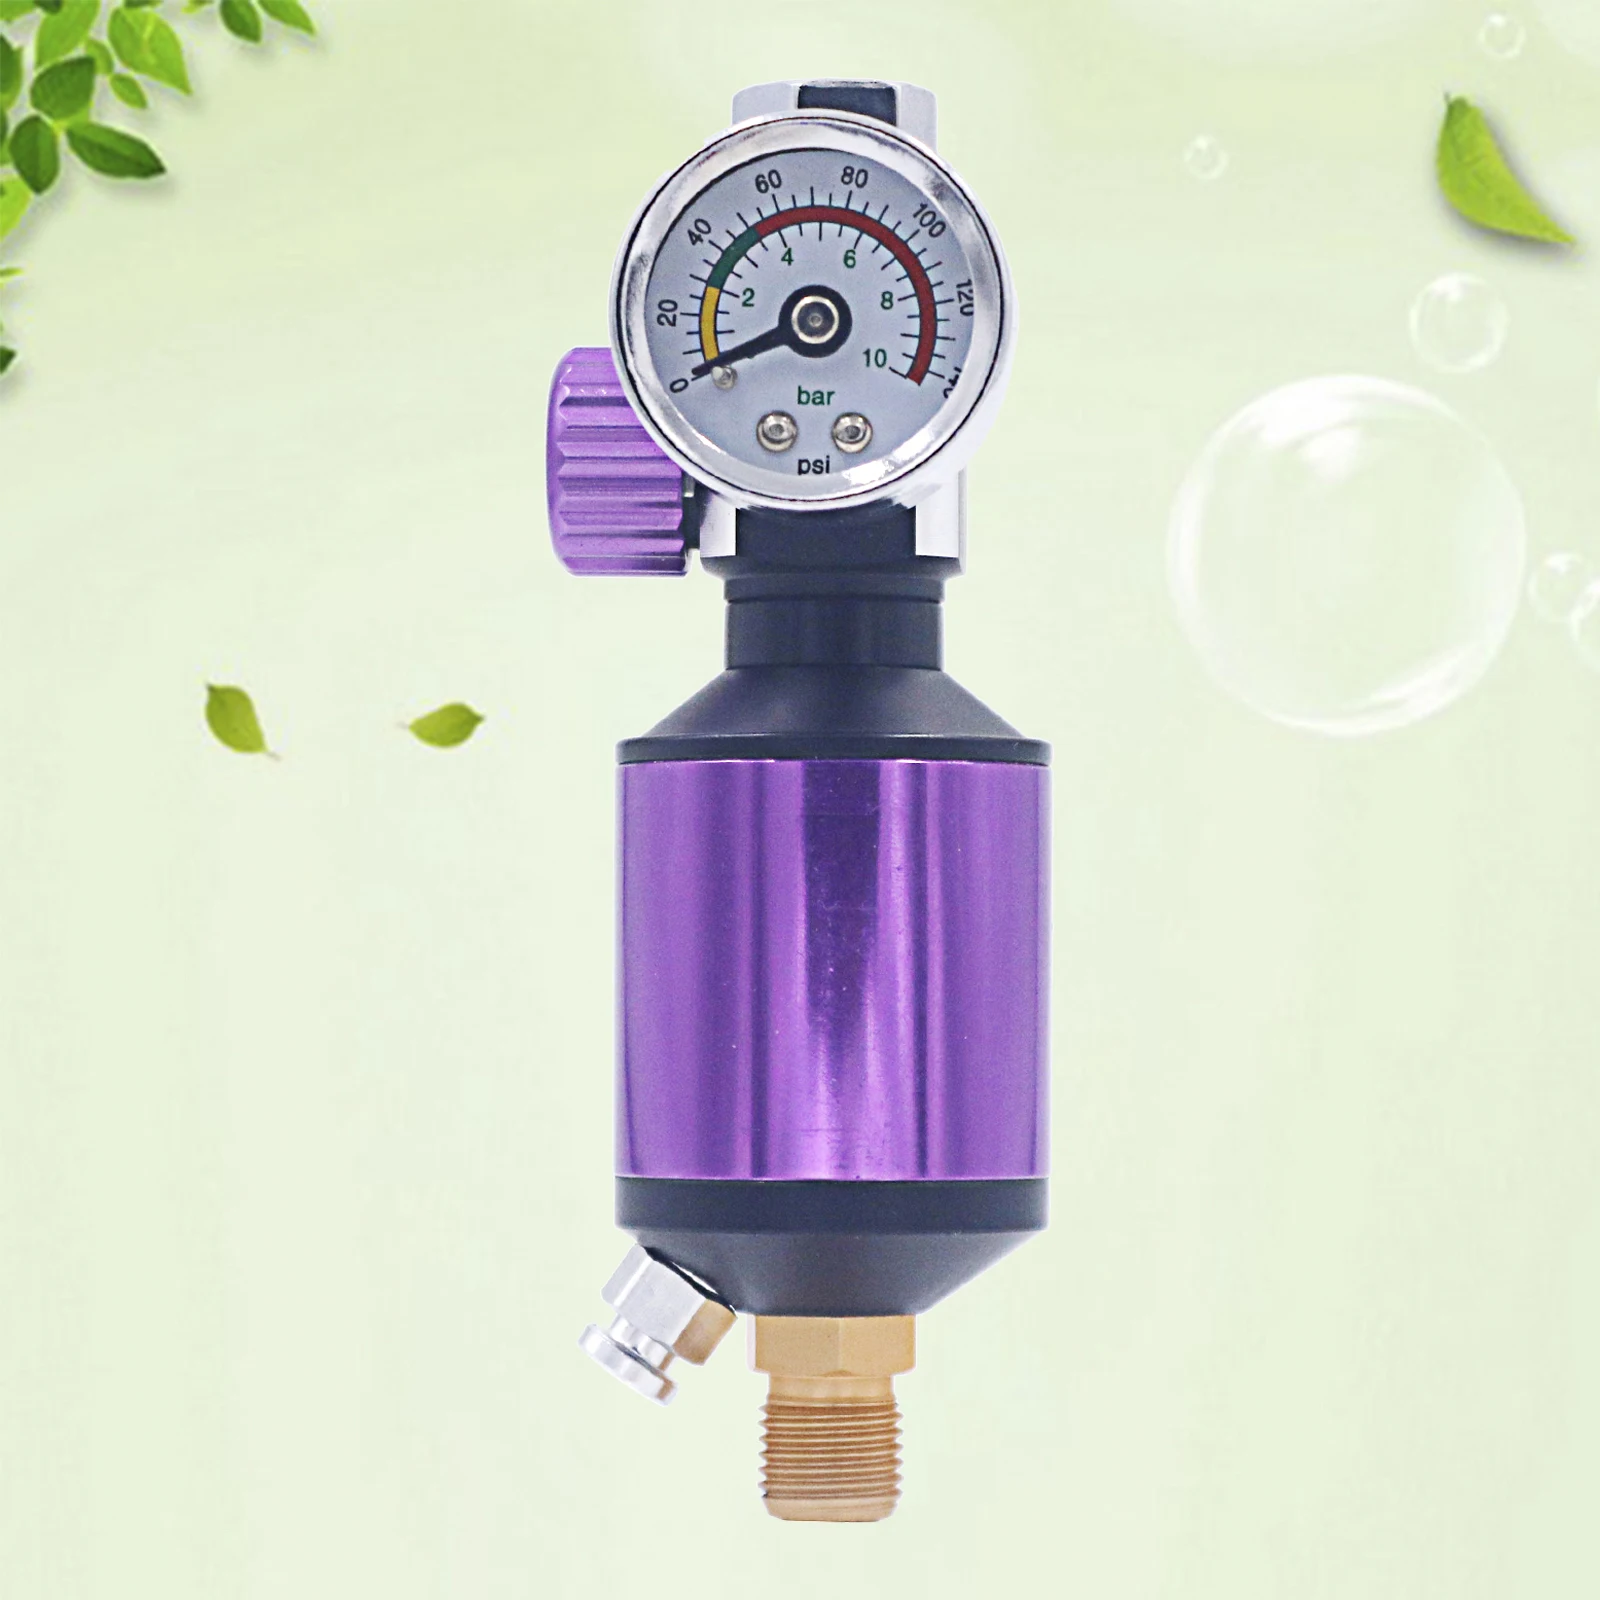 Paint Spray Gun Air Preure Regulator Gauge with Air Filter Kit Oil Water Separator